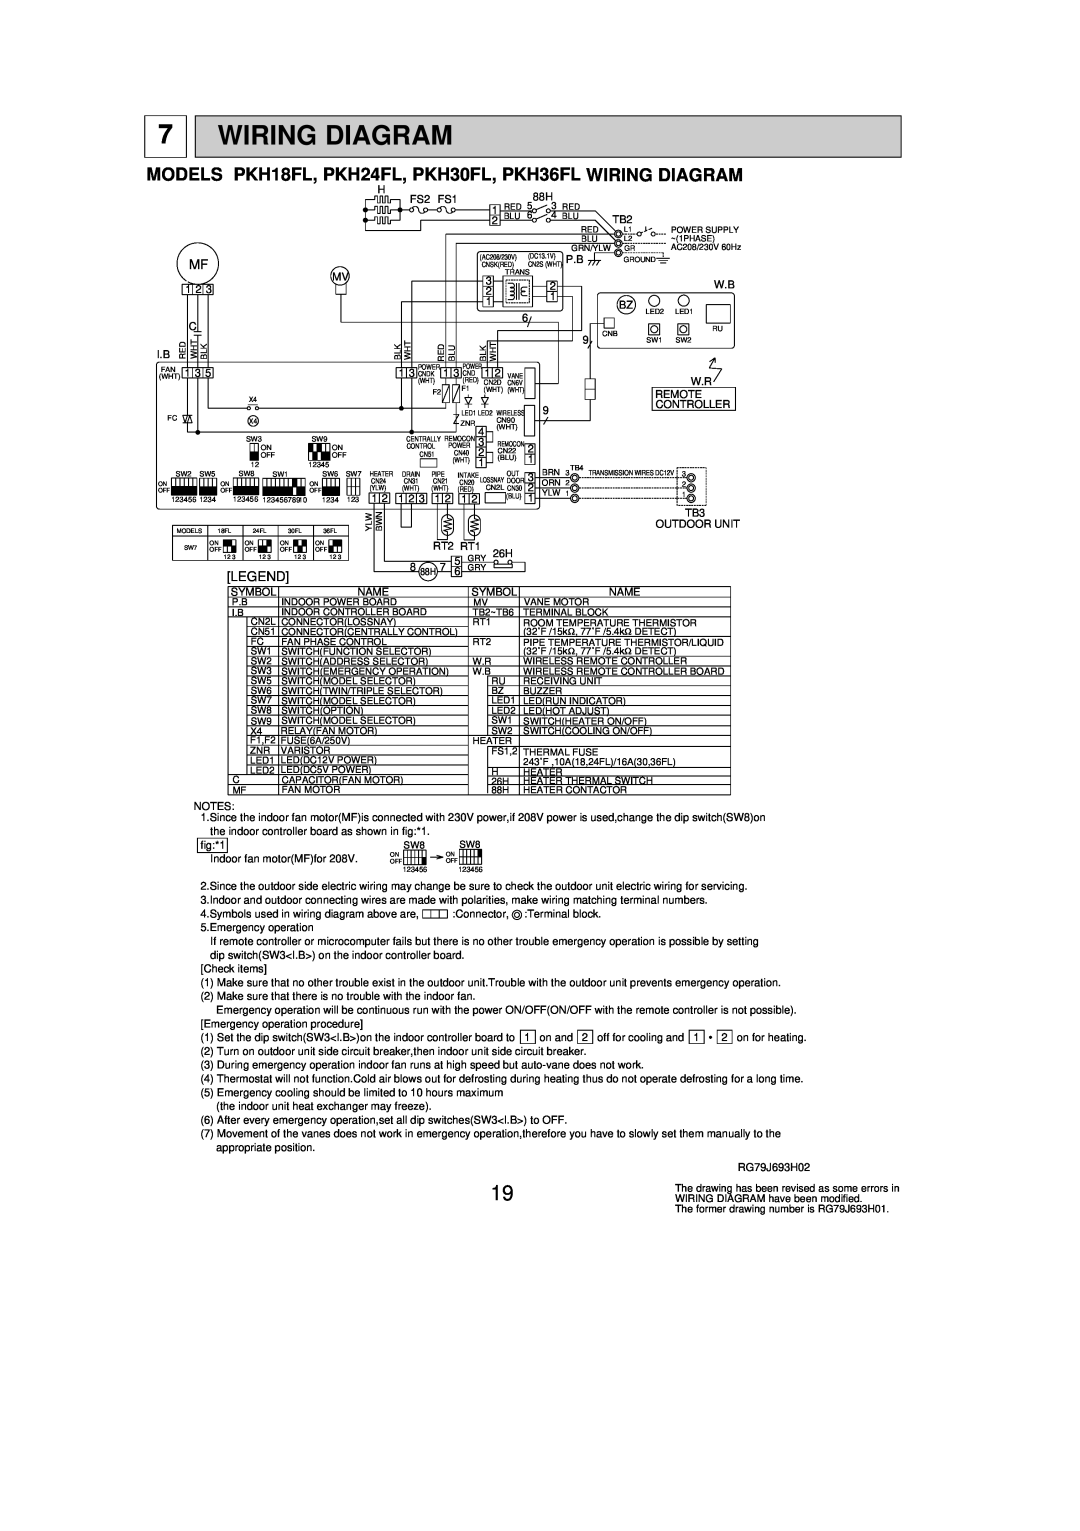 Mitsubishi Electronics service manual Wiring Diagram, MODELS PKH18FL, PKH24FL, PKH30FL, PKH36FL WIRING DIAGRAM 